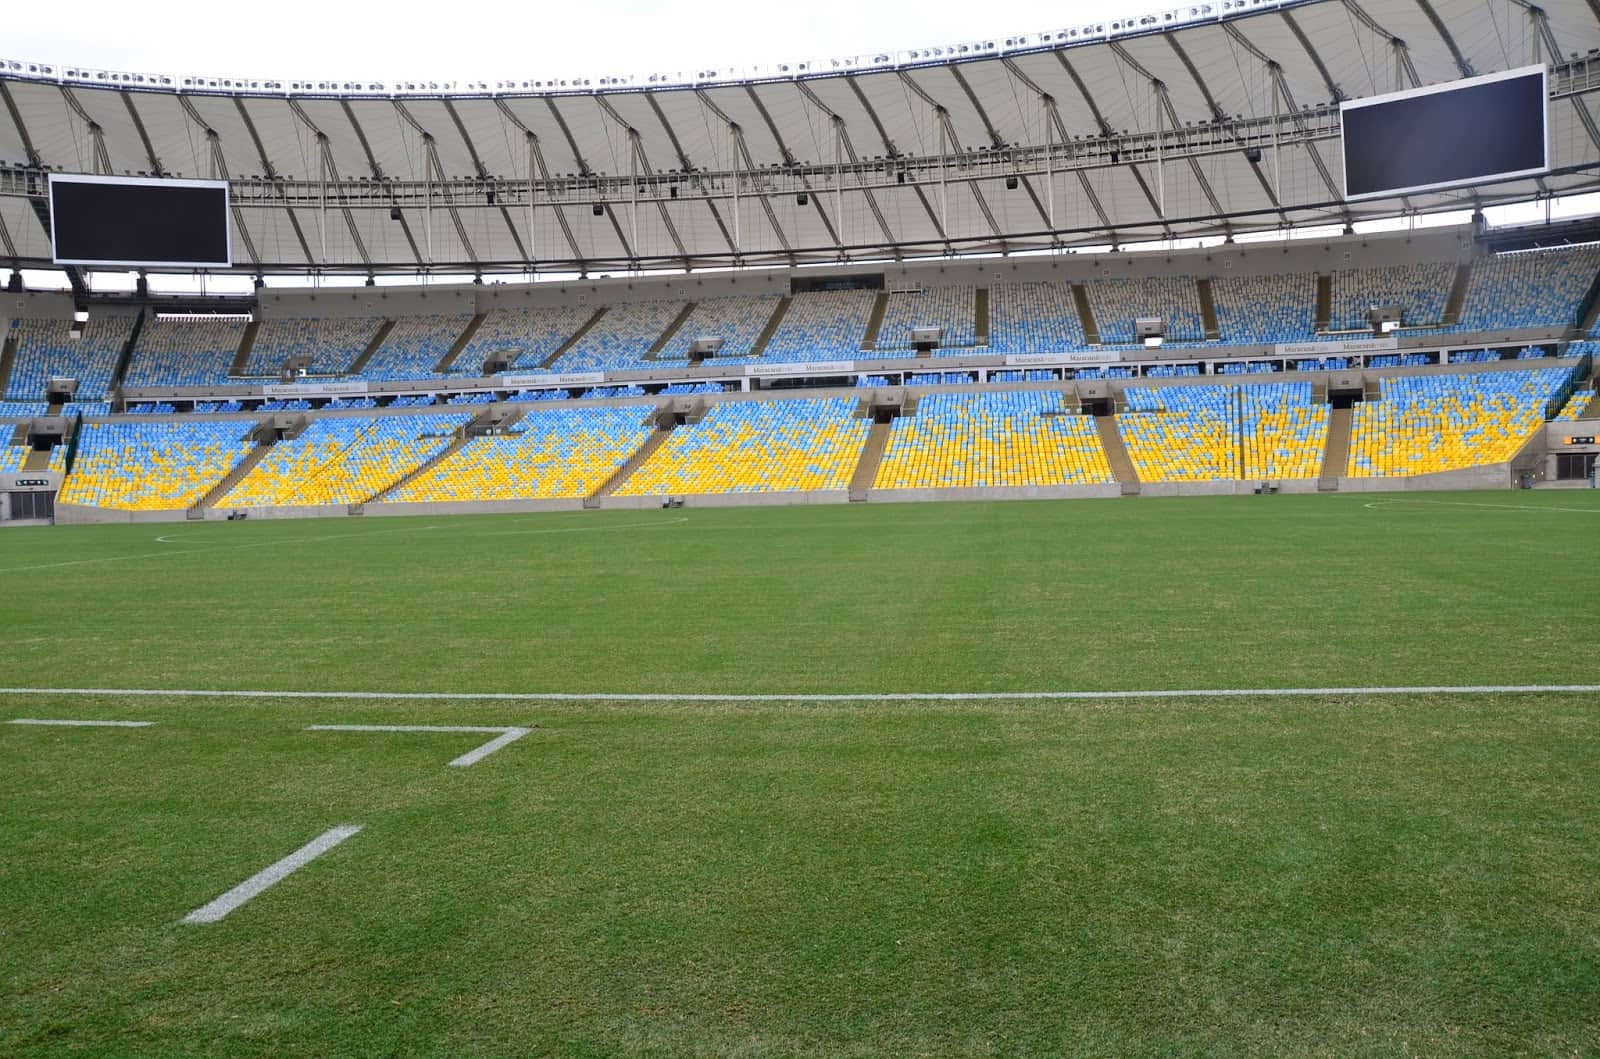 View from the visitors' bench at Estádio do Maracanã in Rio de Janeiro, Brazil